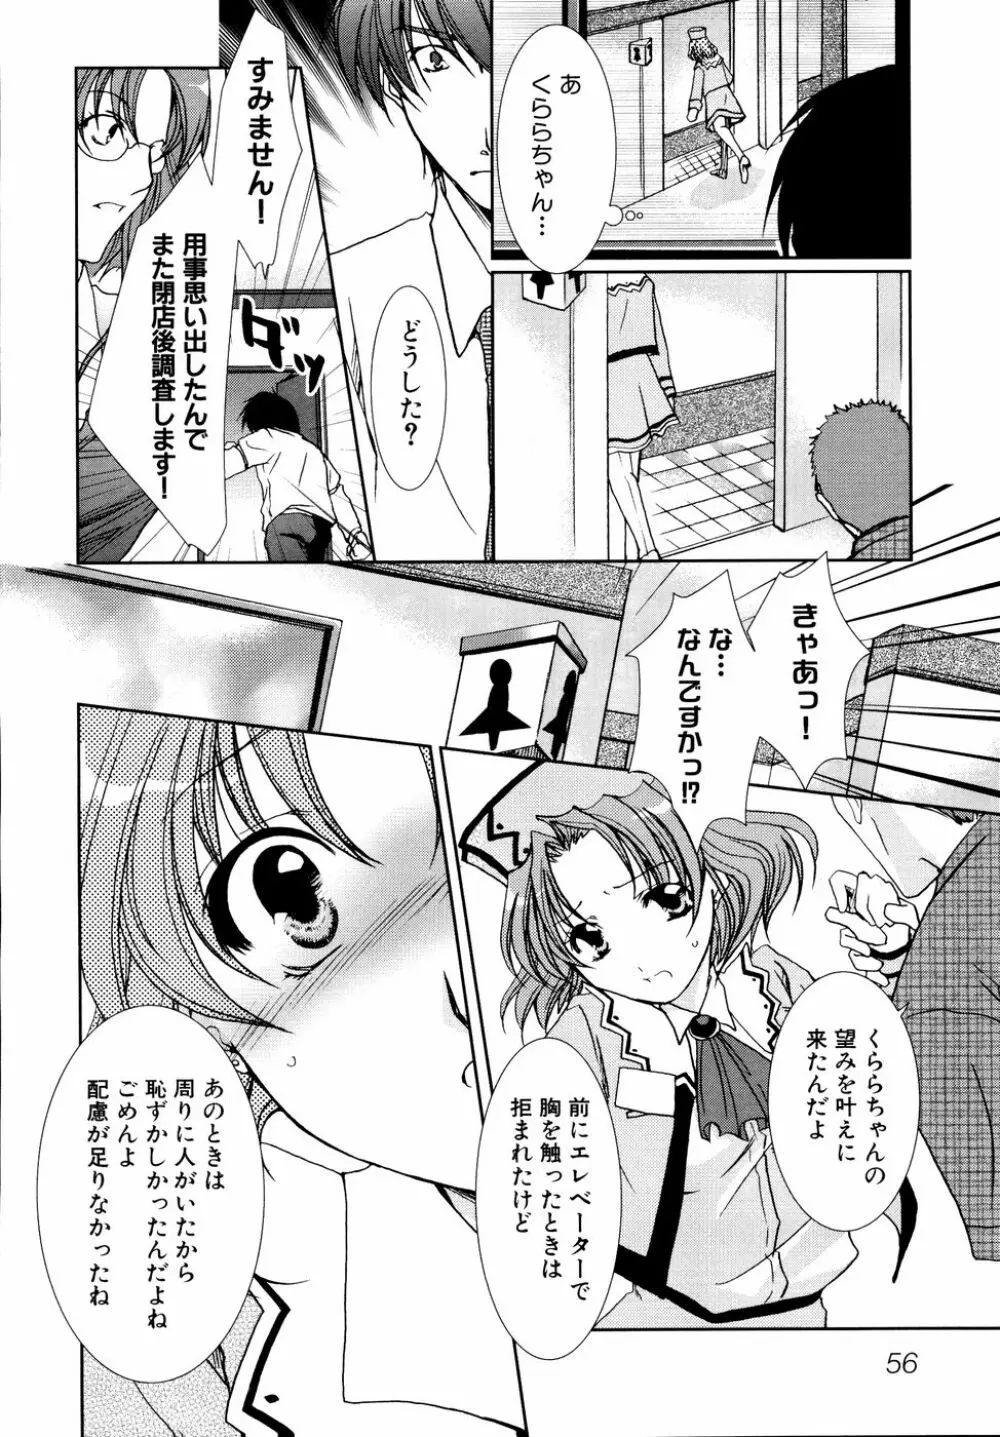 Ryouki First Chapter: Zeroshiki Department Store 56ページ